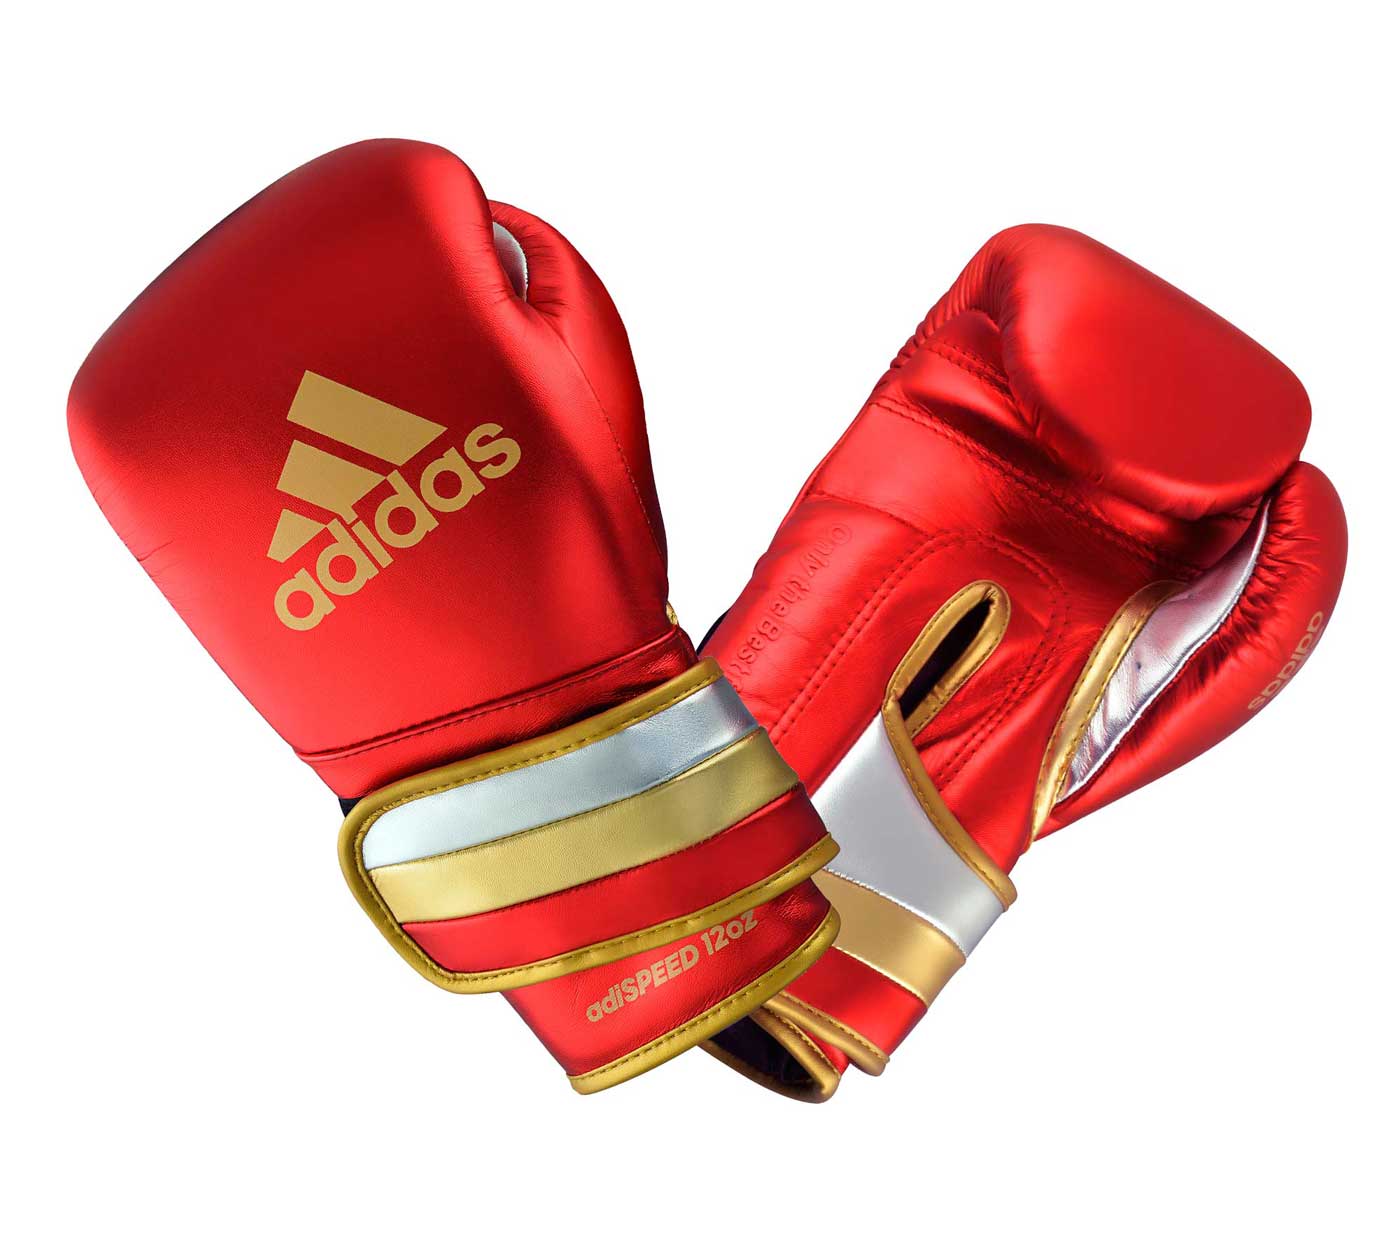 Перчатки боксерские adidas AdiSpeed Metallic красно-золото-серебристые 14 унц. артикул adiSBG501ProM